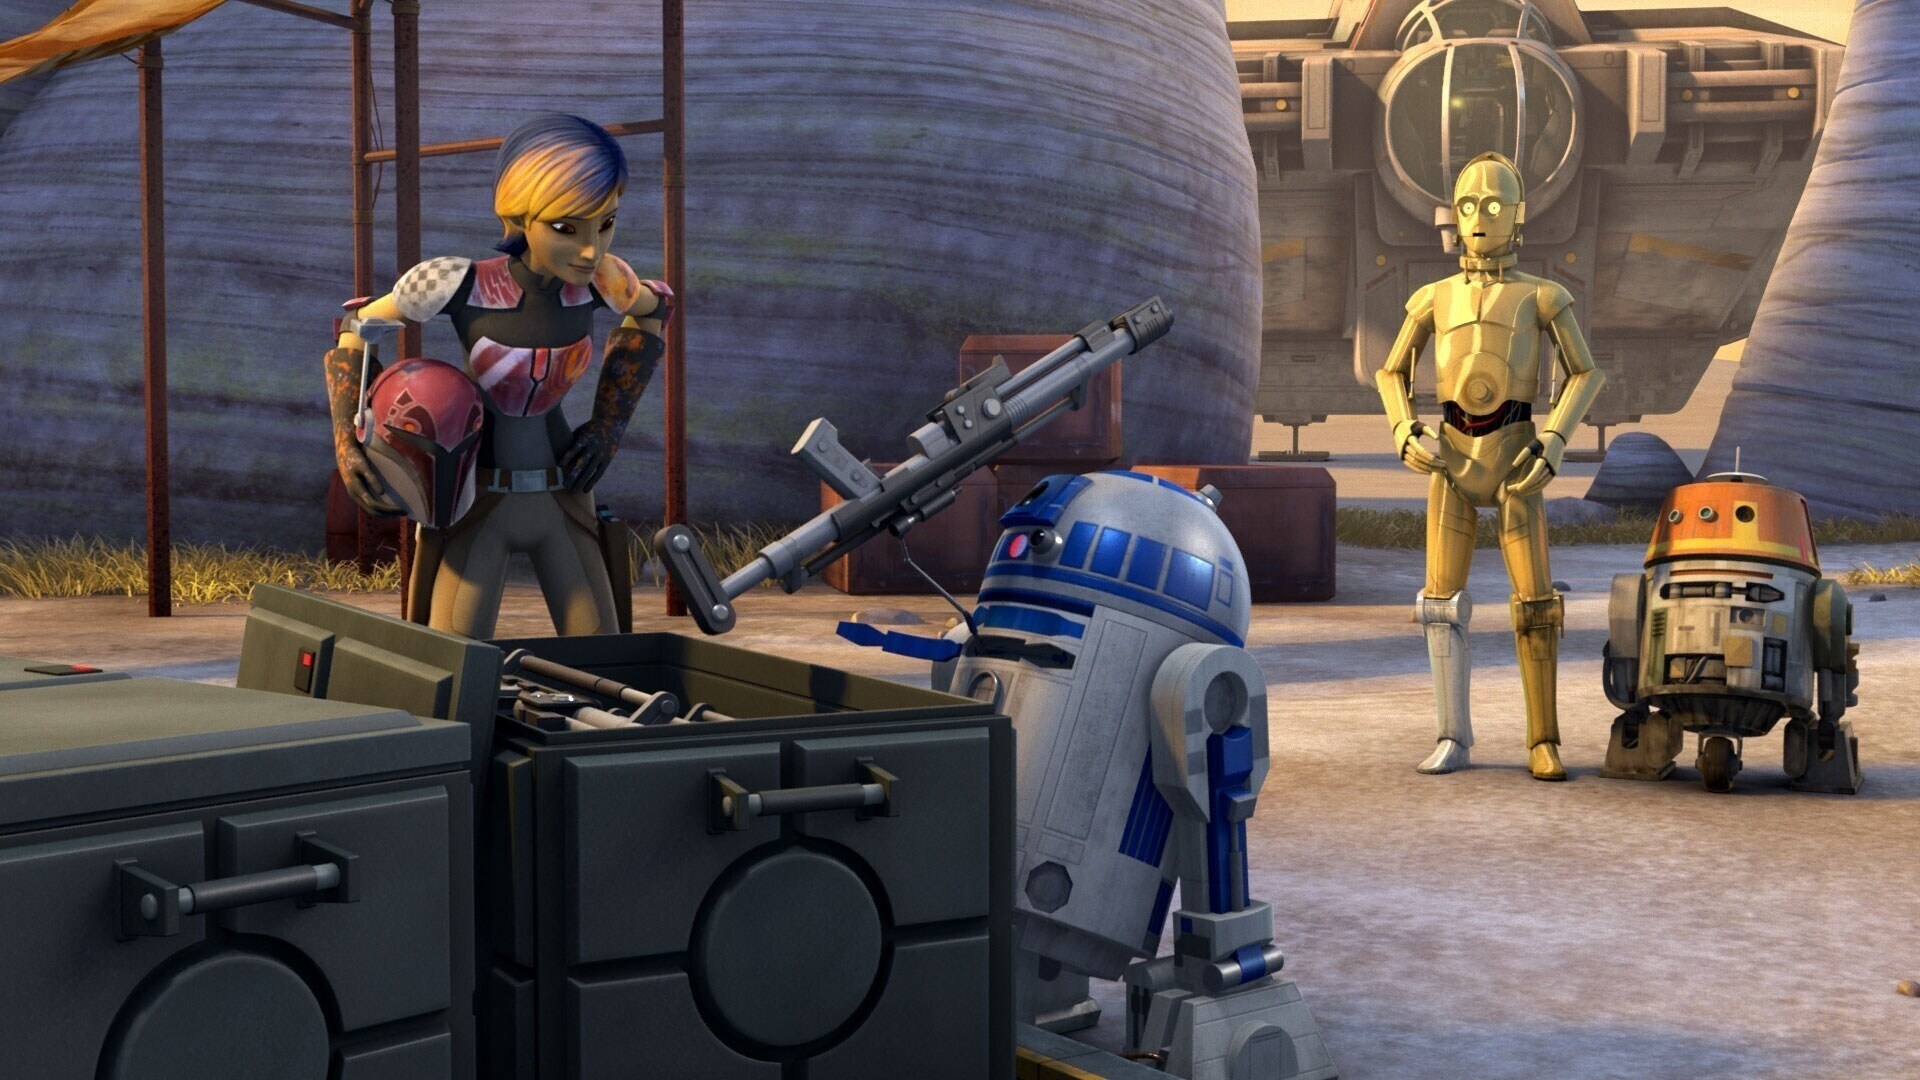 Sabine Wren, R2-D2, C-3PO, and Chopper in Star Wars Rebels